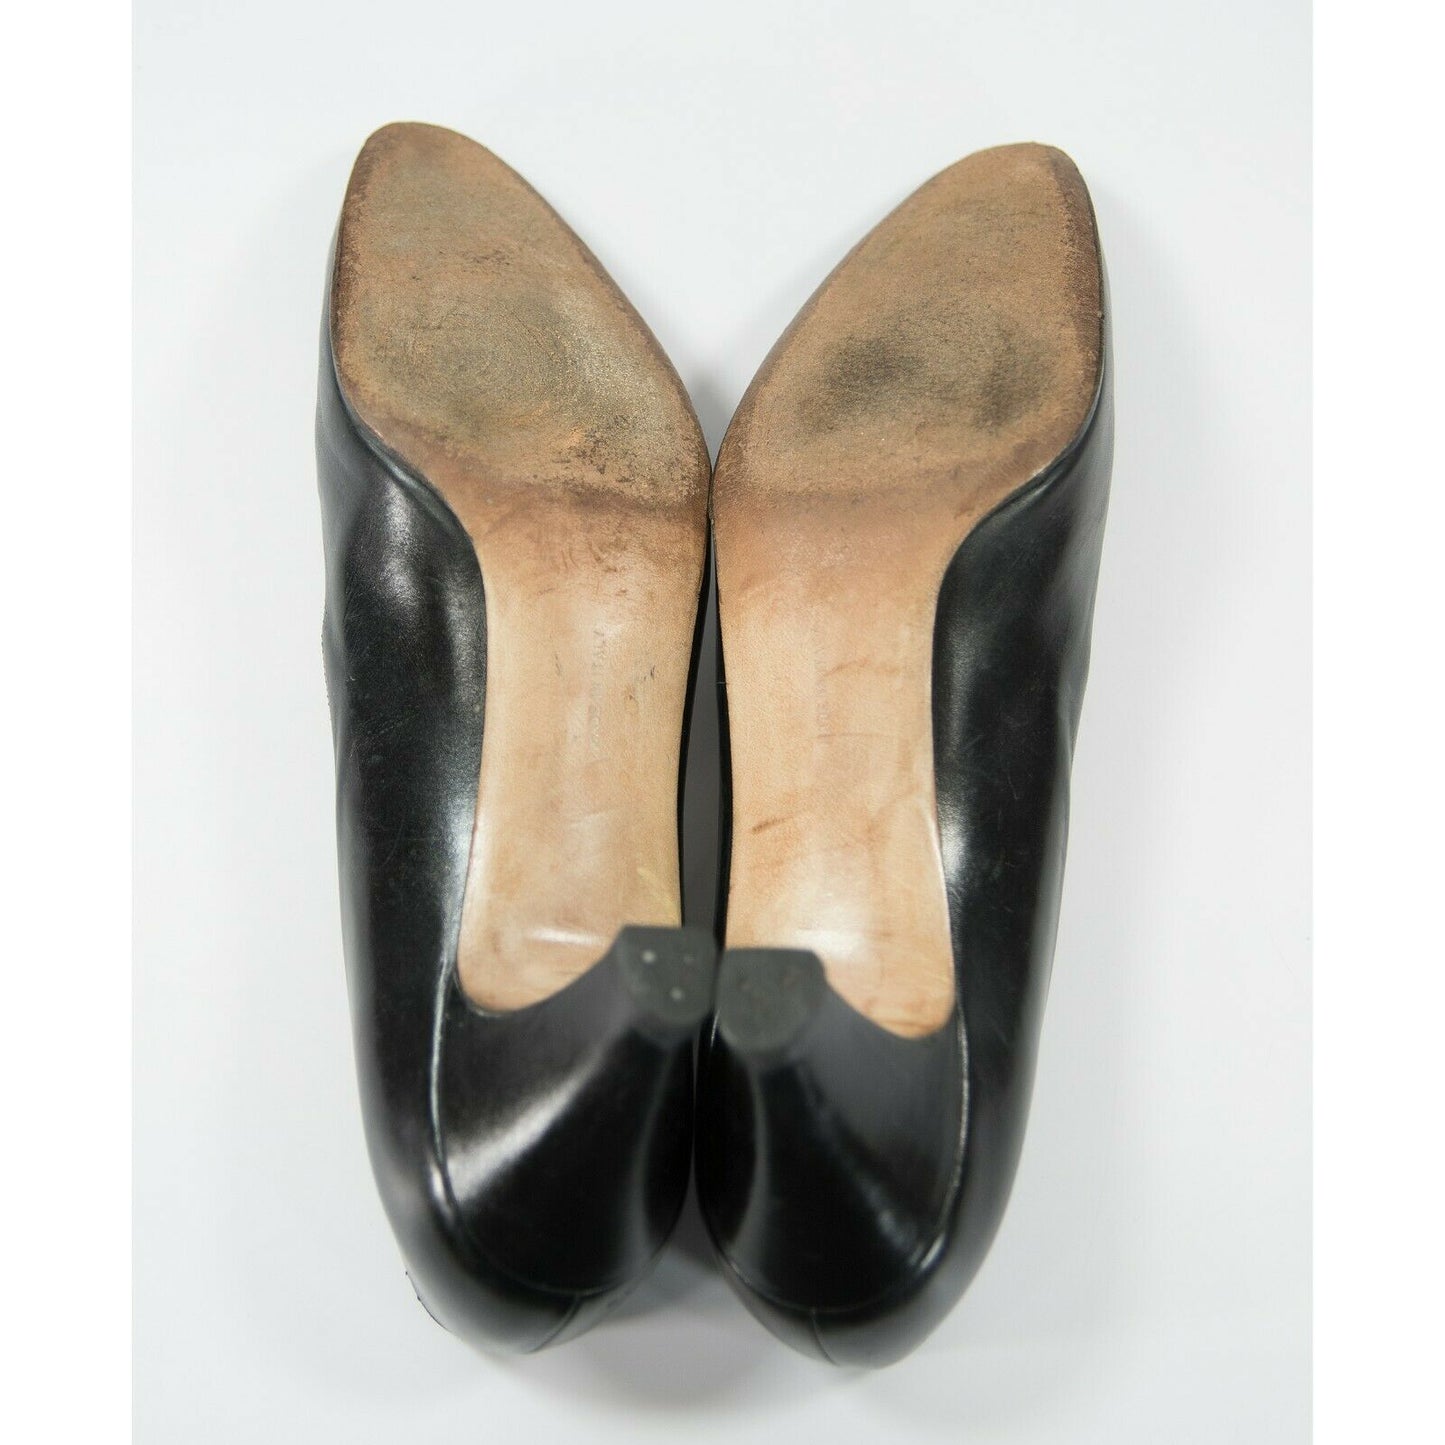 Salvatore Ferragamo DQU8987 Black Leather Low Heels Shoes Size 8.5 Extra Narrow